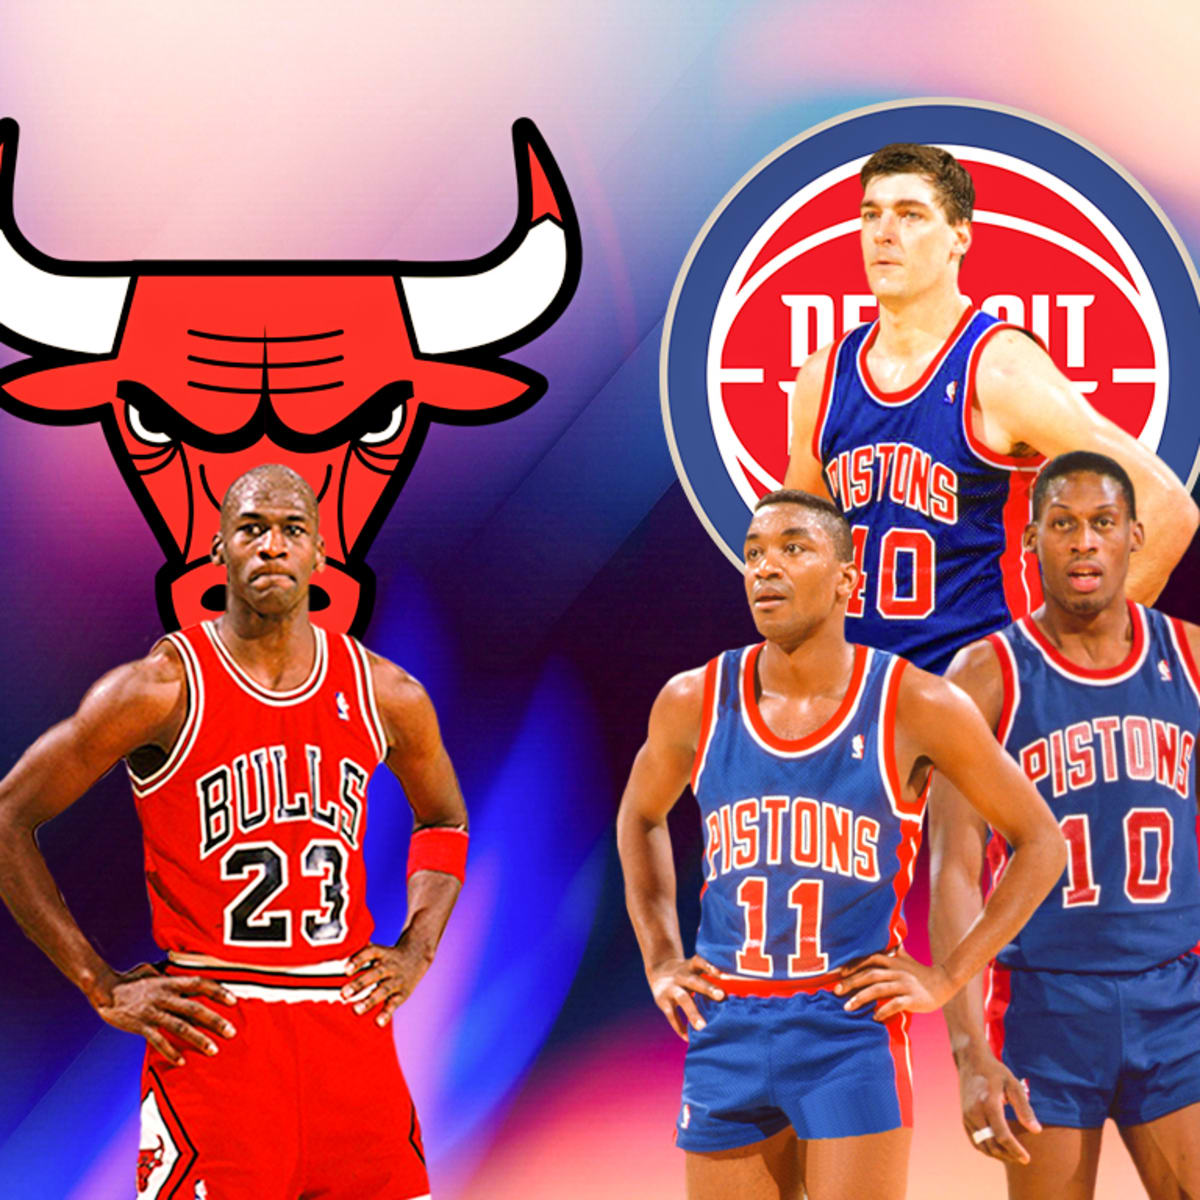 Detroit Pistons' fan admits he put cheat code in NBA Jam to stop Bulls